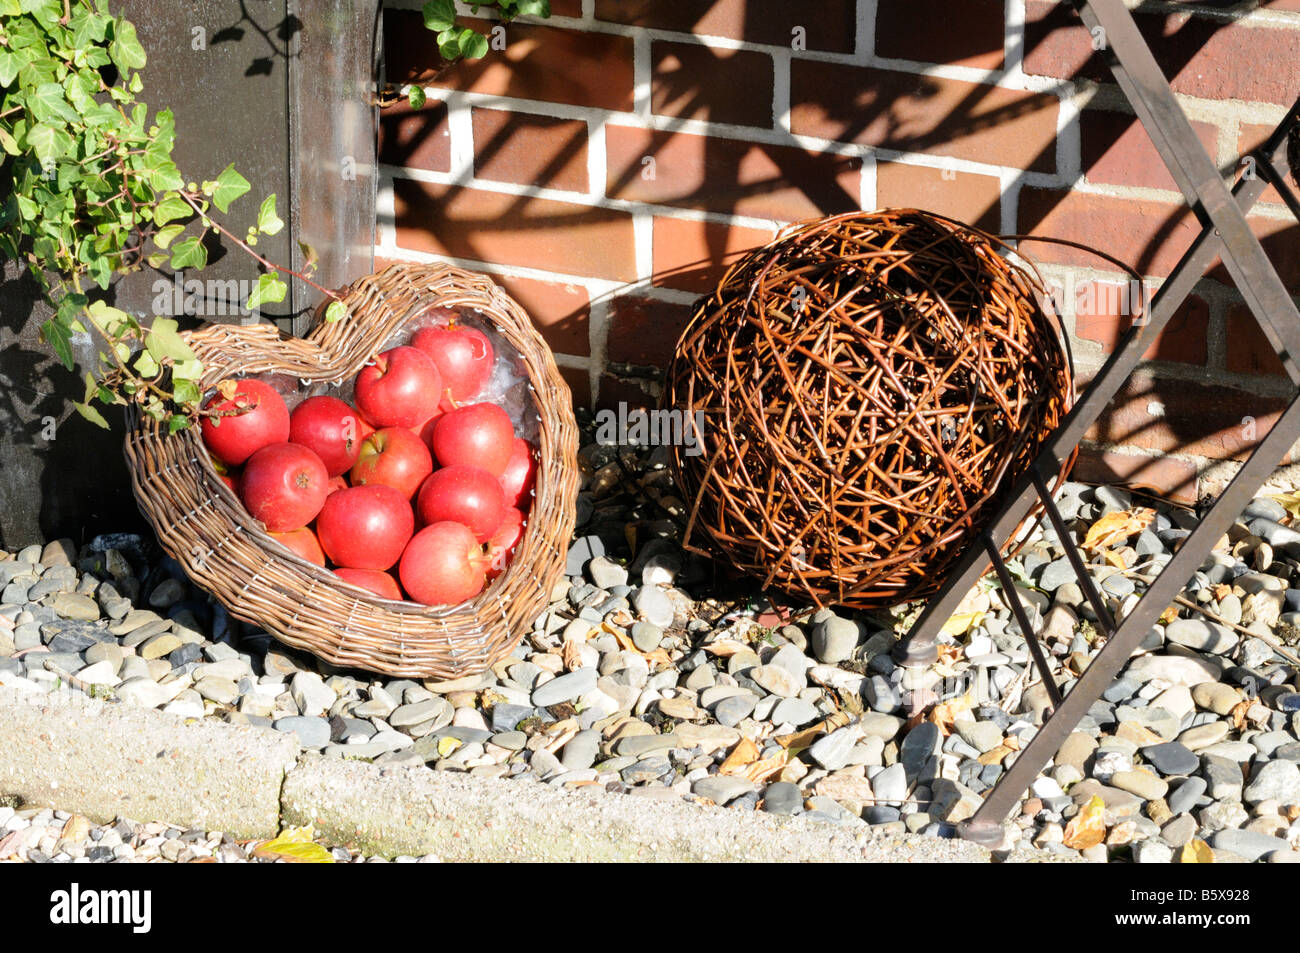 Gartendekoration mit Äpfeln und Korbwaren décoration de jardin les pommes et osier Banque D'Images